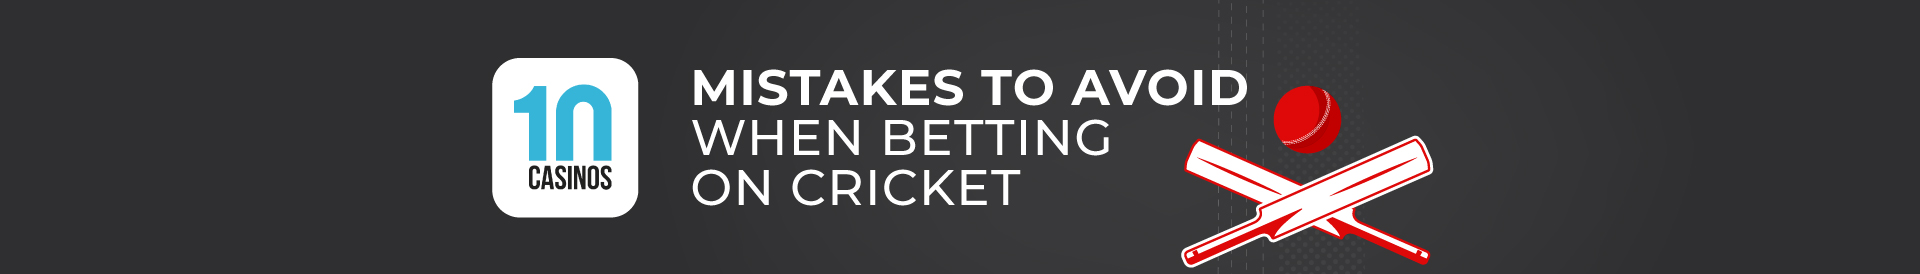 top 10 mistakes to avoid when betting on cricket desktop